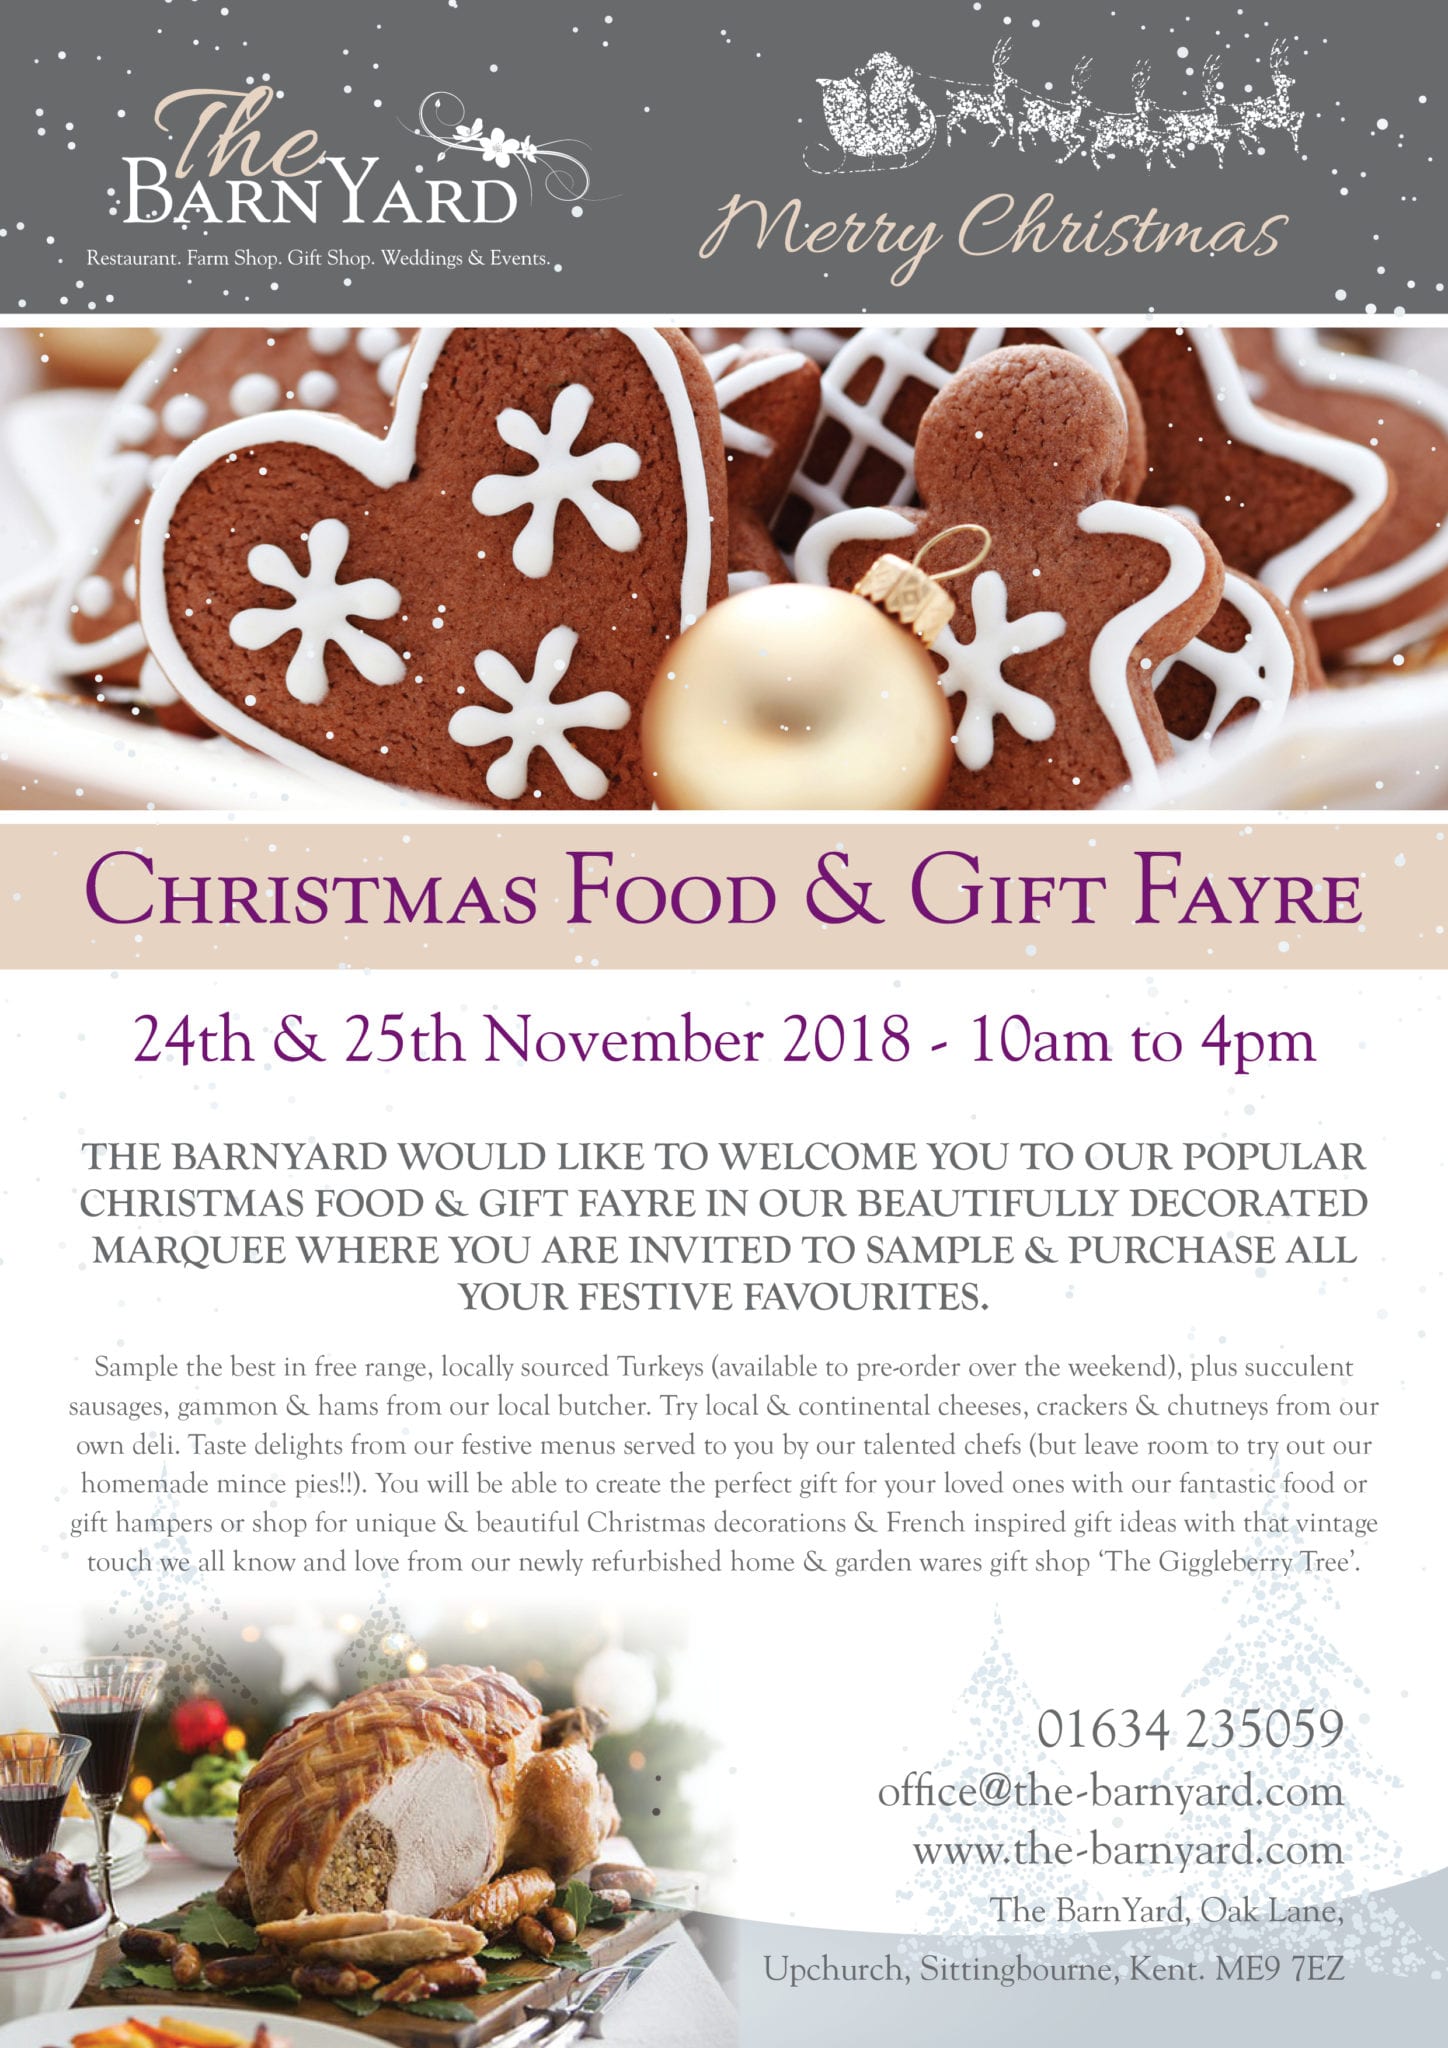 Christmas Food & Fayre Flyer